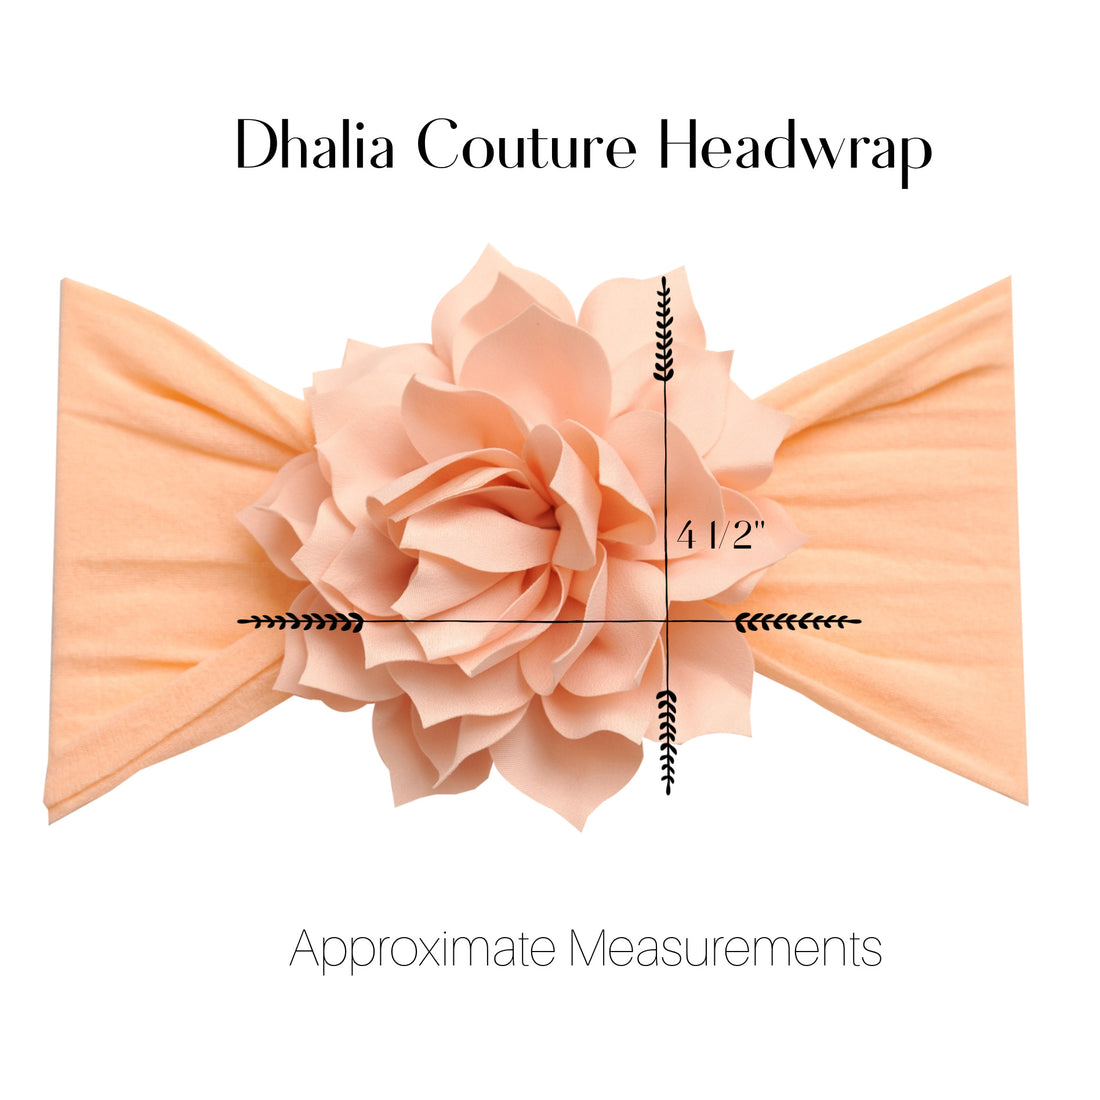 Dahlia Flower Headband - Black